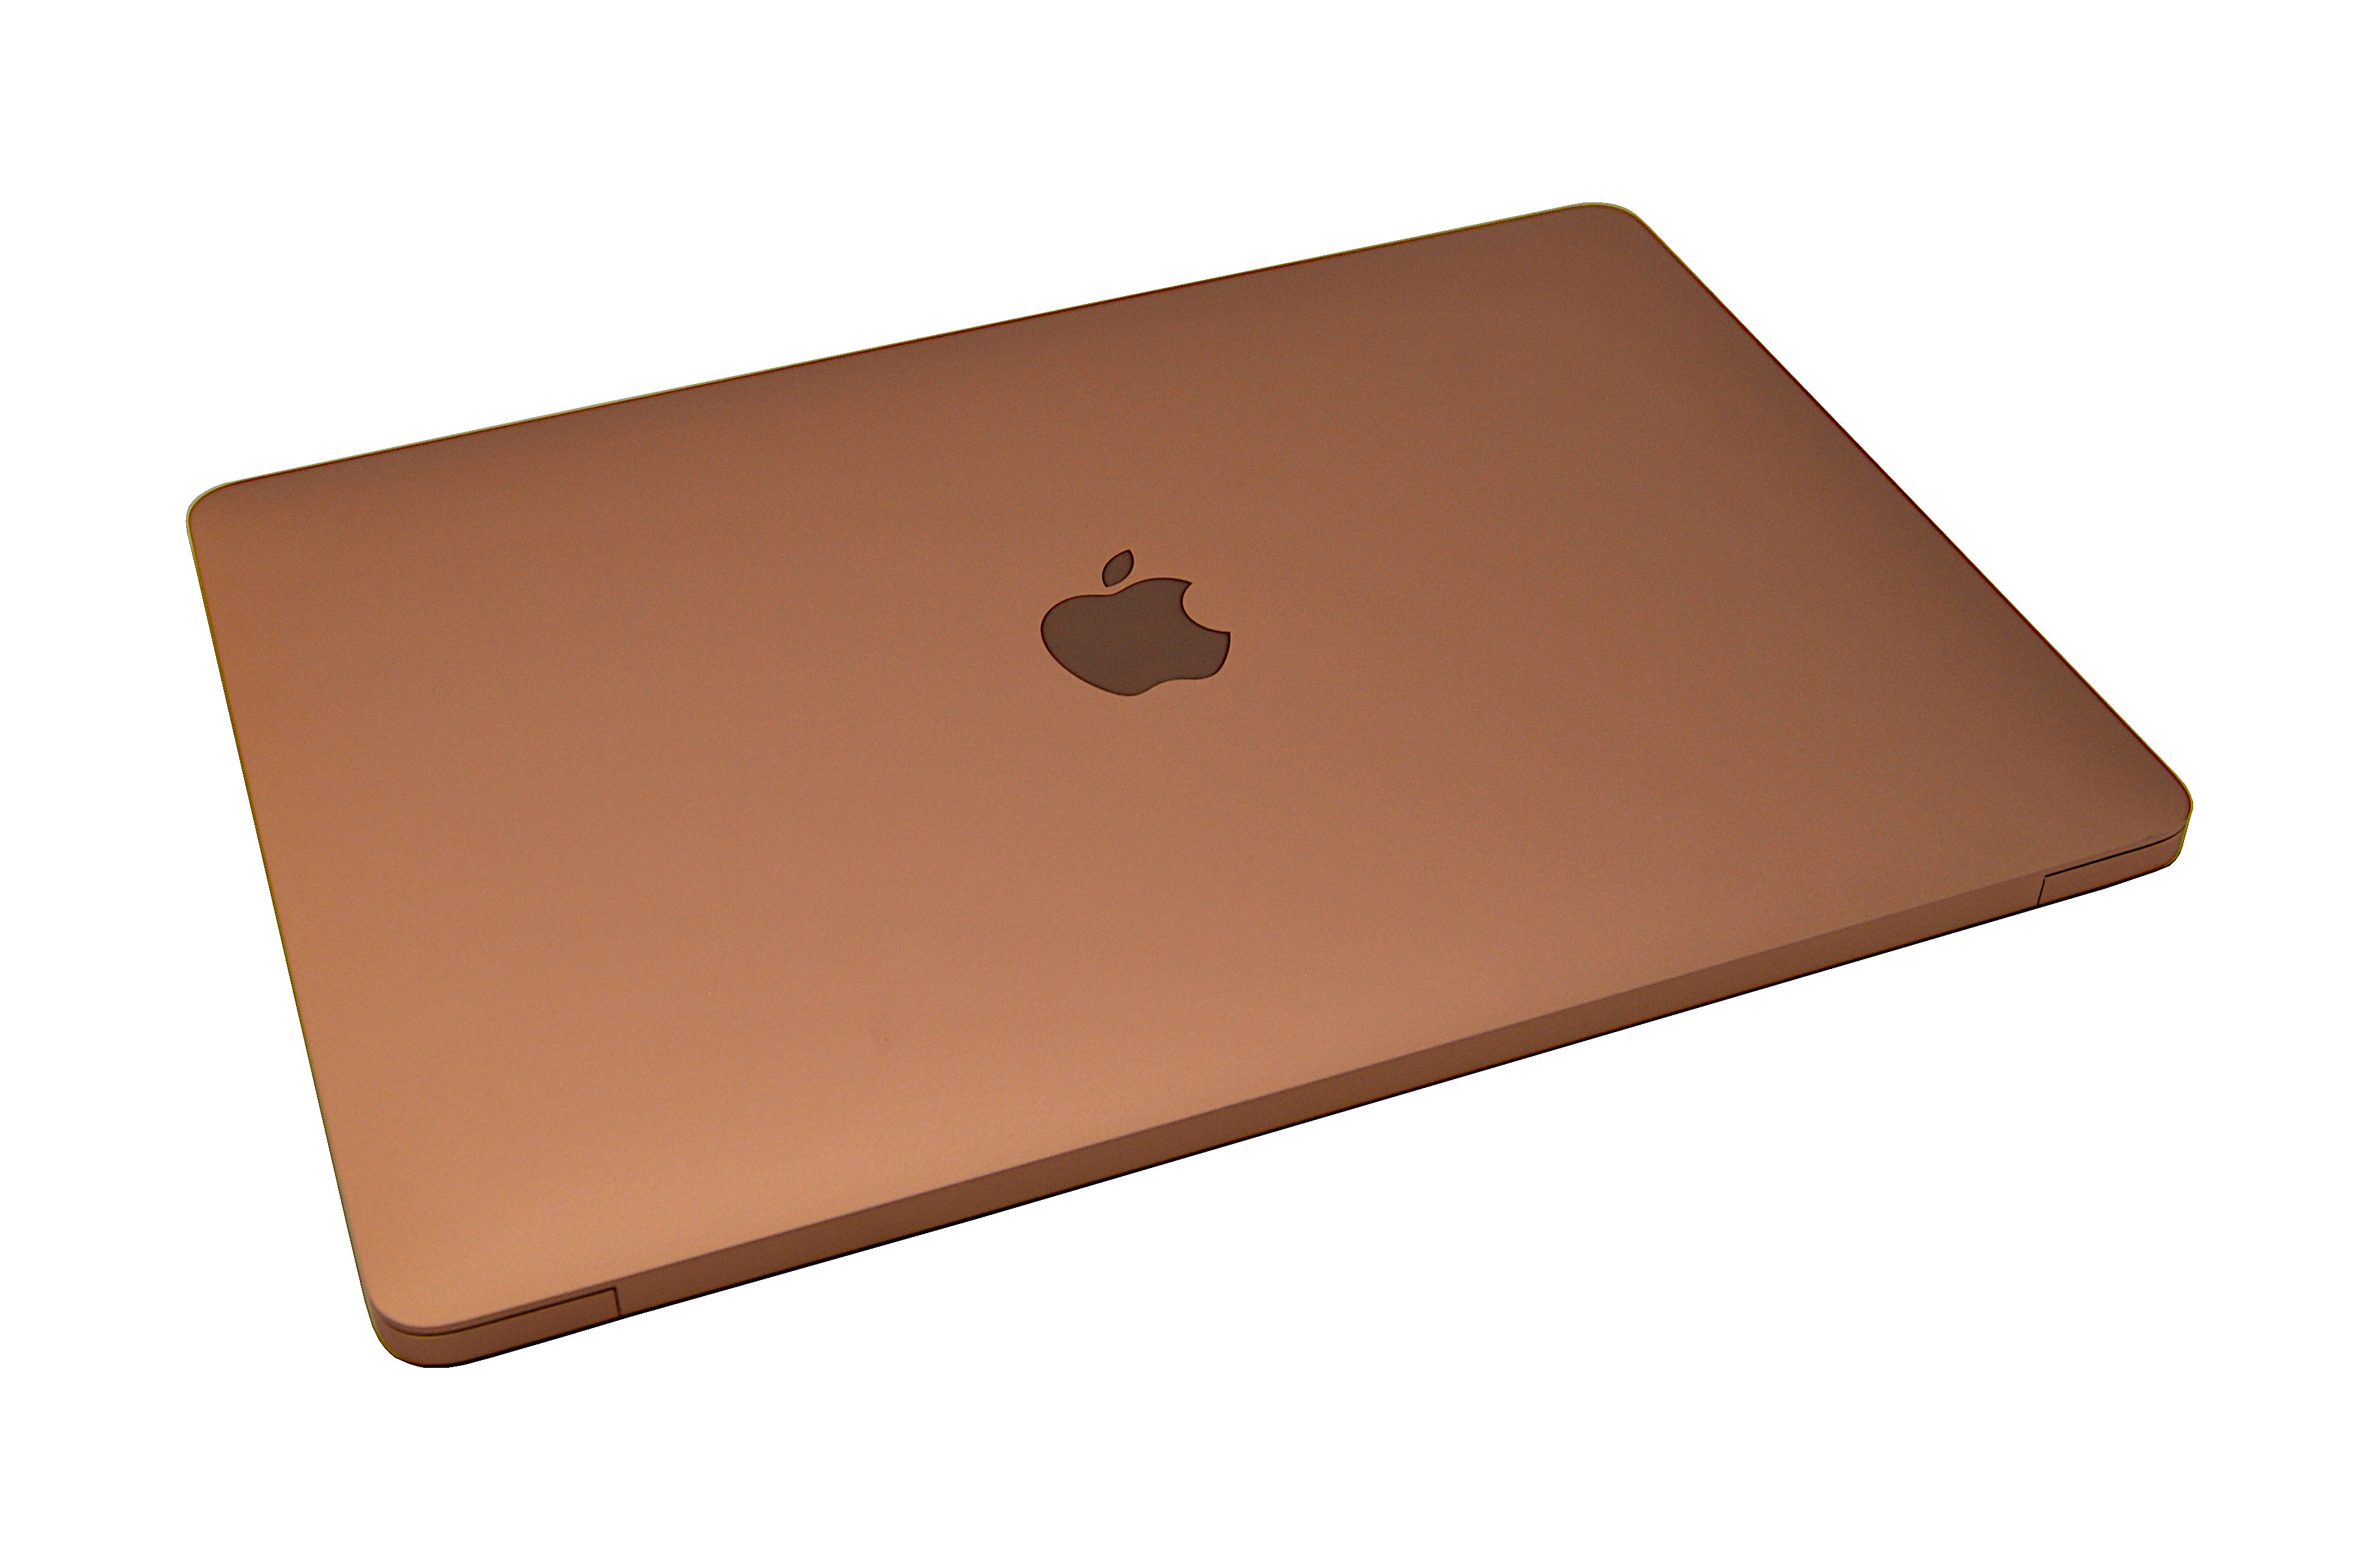 Apple MacBook Air 2020 Laptop, 13.3" Intel® Core™ i3, 8GB RAM, 256GB SSD, A2179